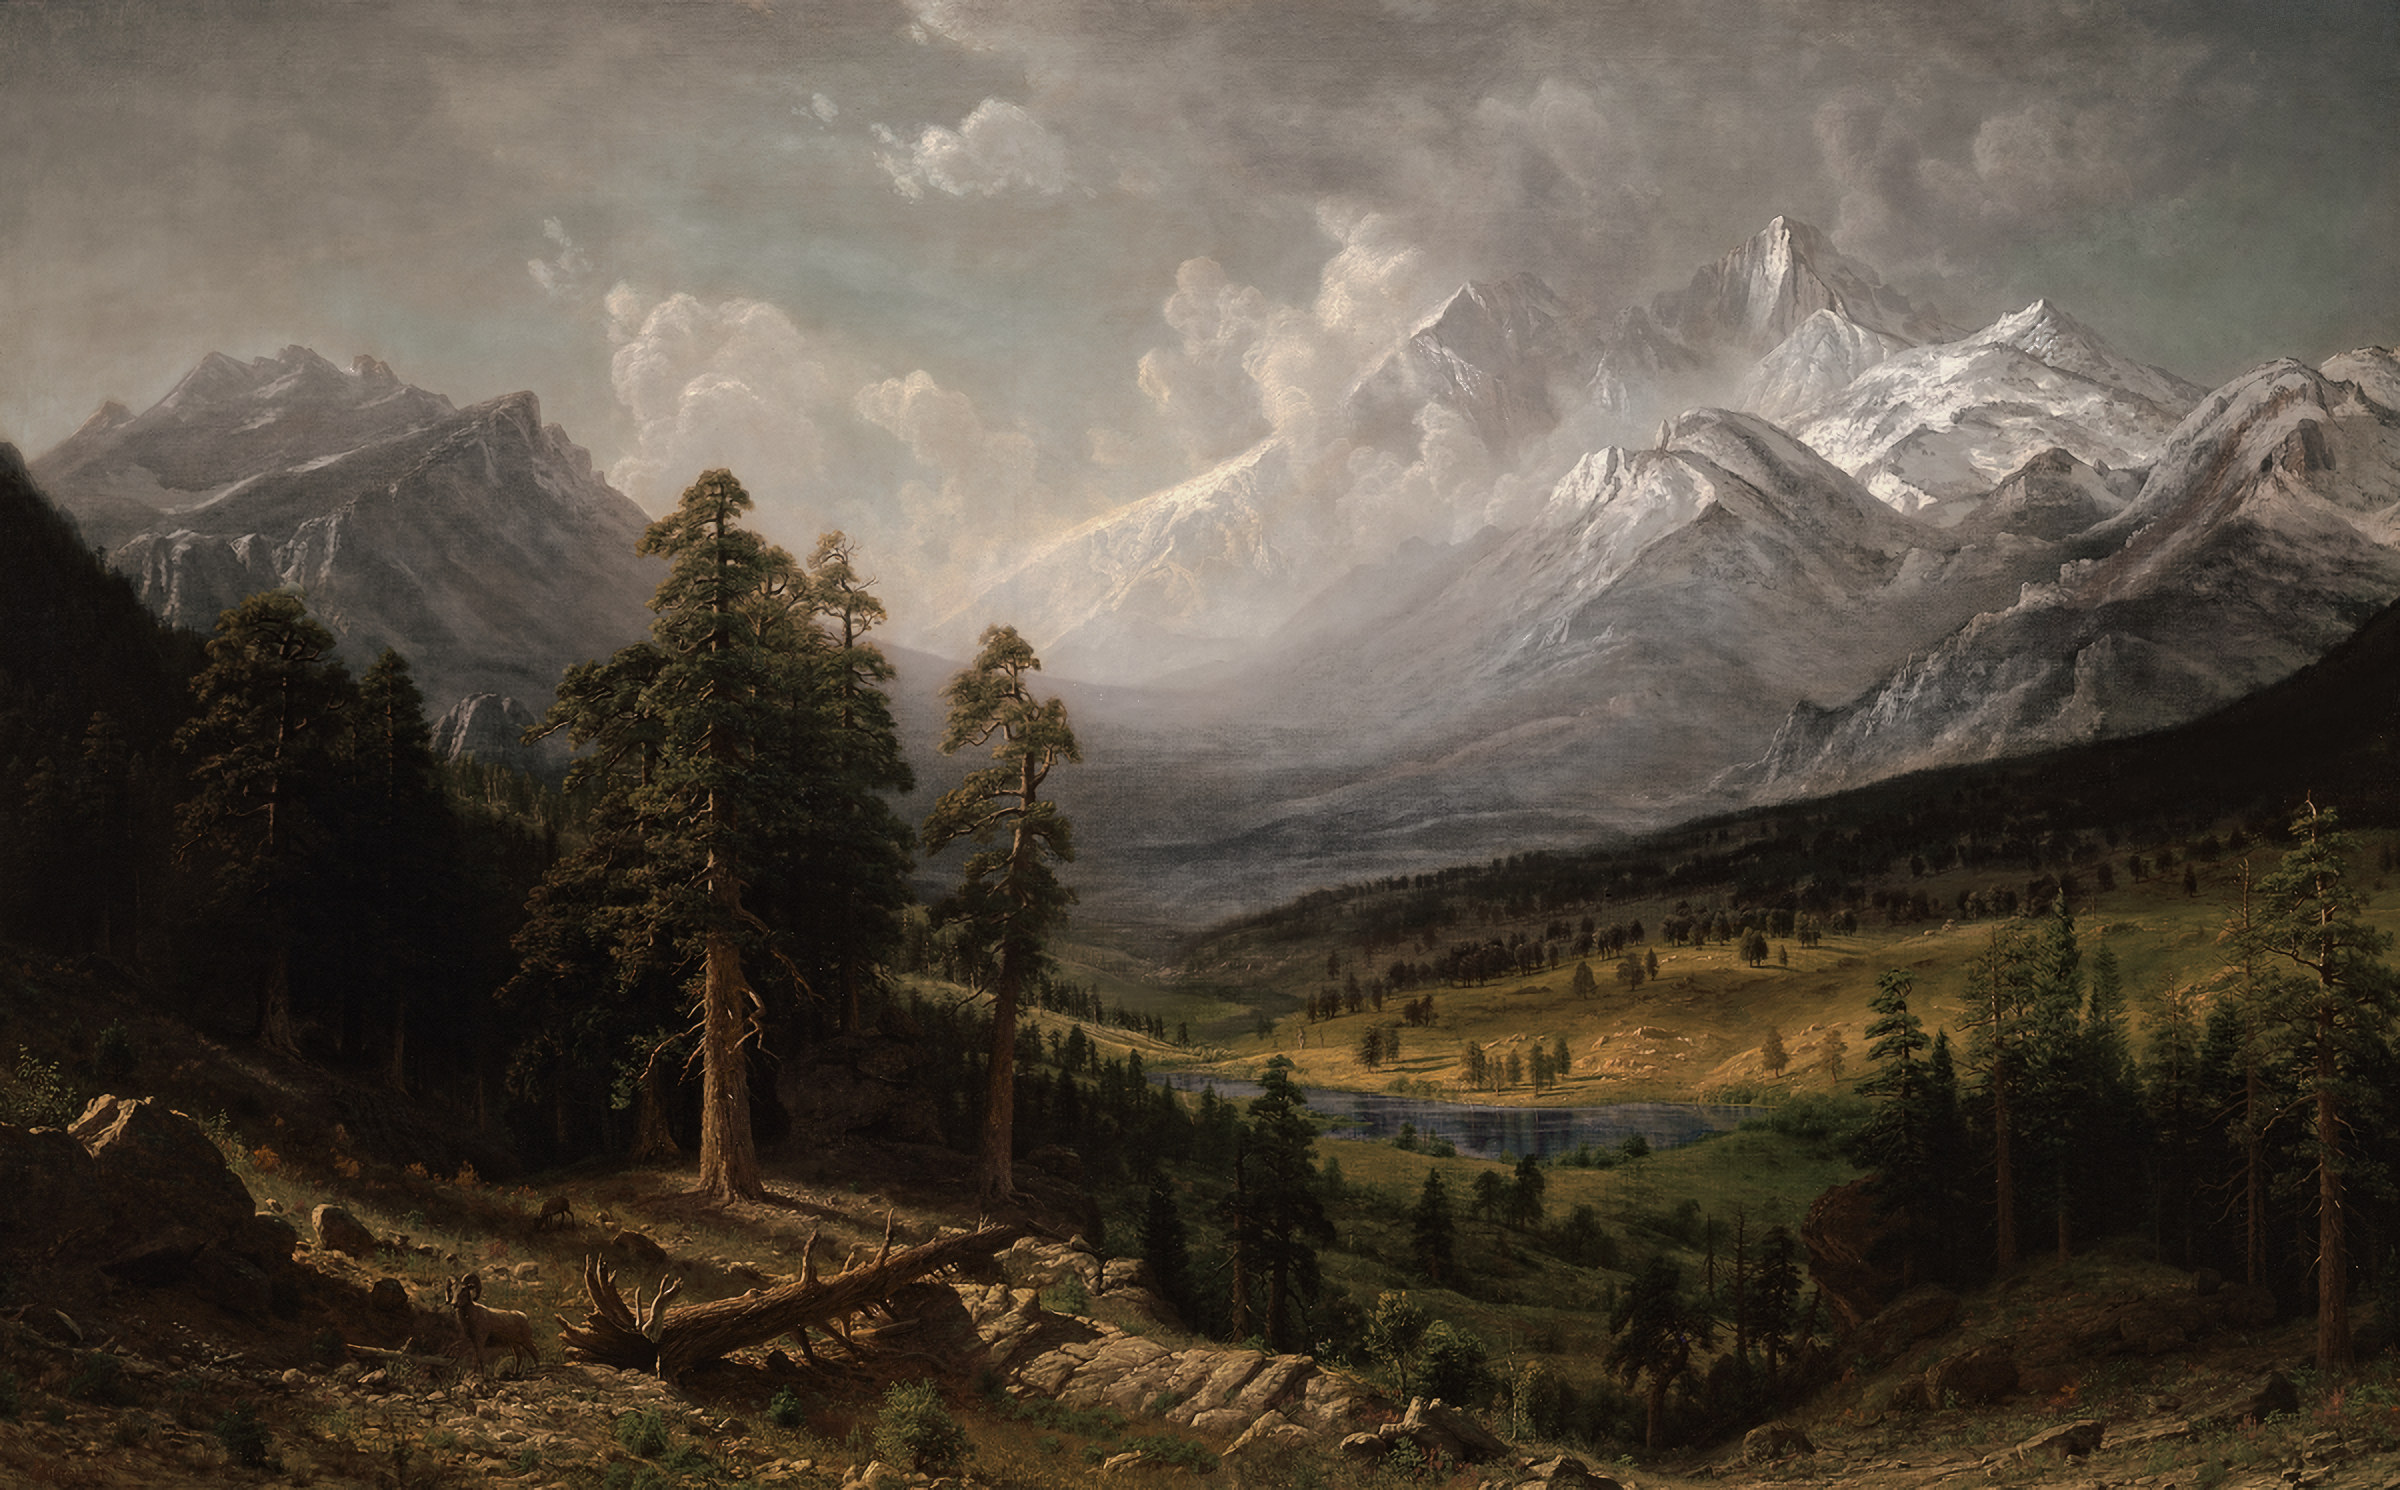 General 2400x1490 nature Albert Bierstadt mountains landscape painting classic art